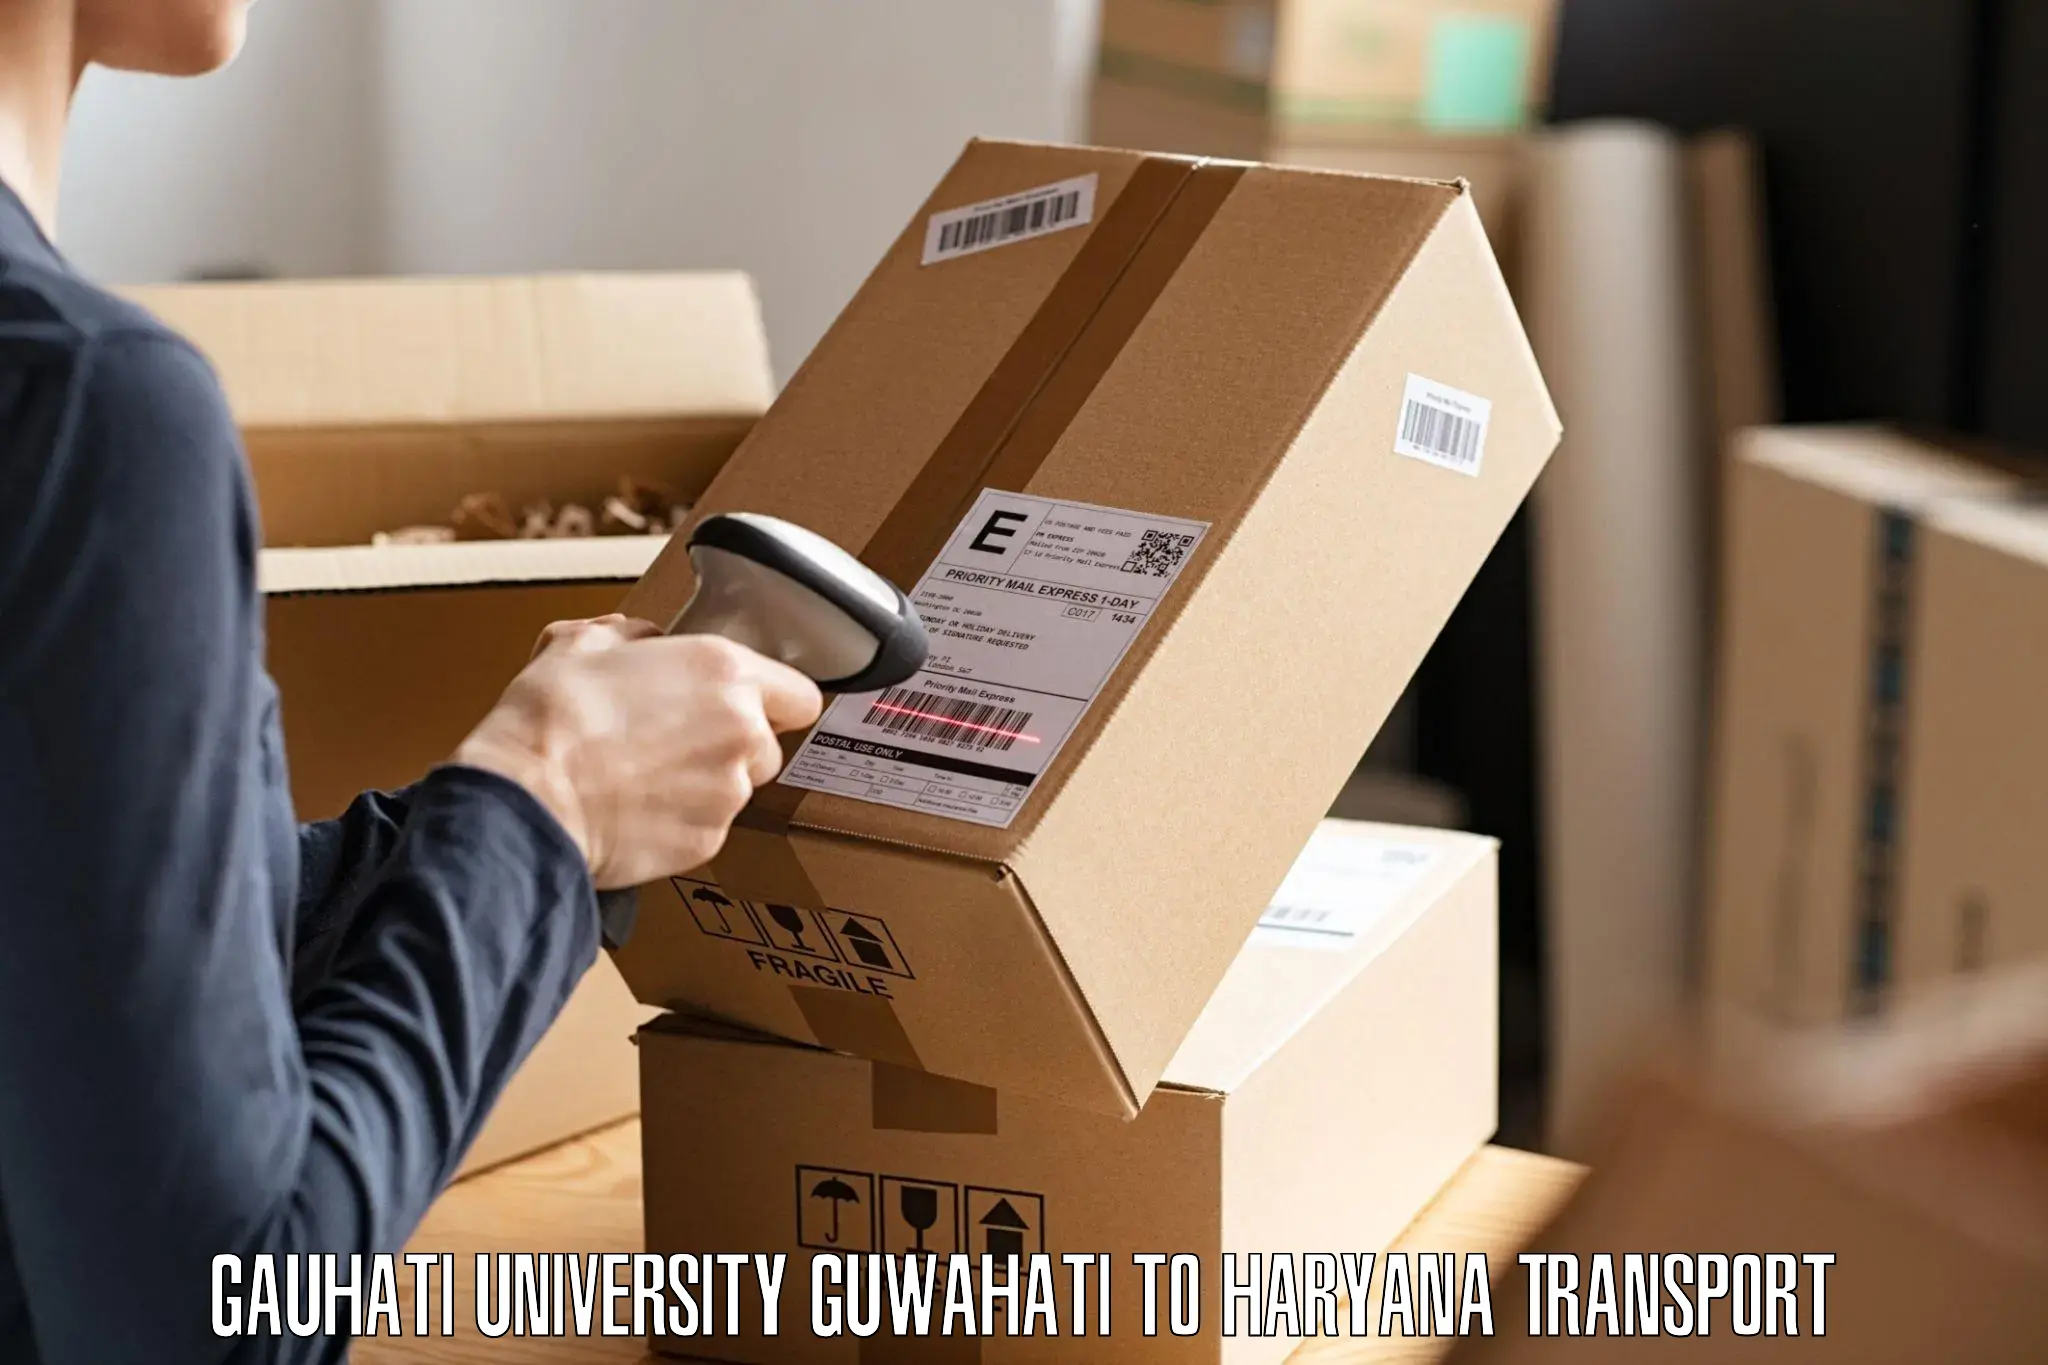 Furniture transport service Gauhati University Guwahati to Chaudhary Charan Singh Haryana Agricultural University Hisar